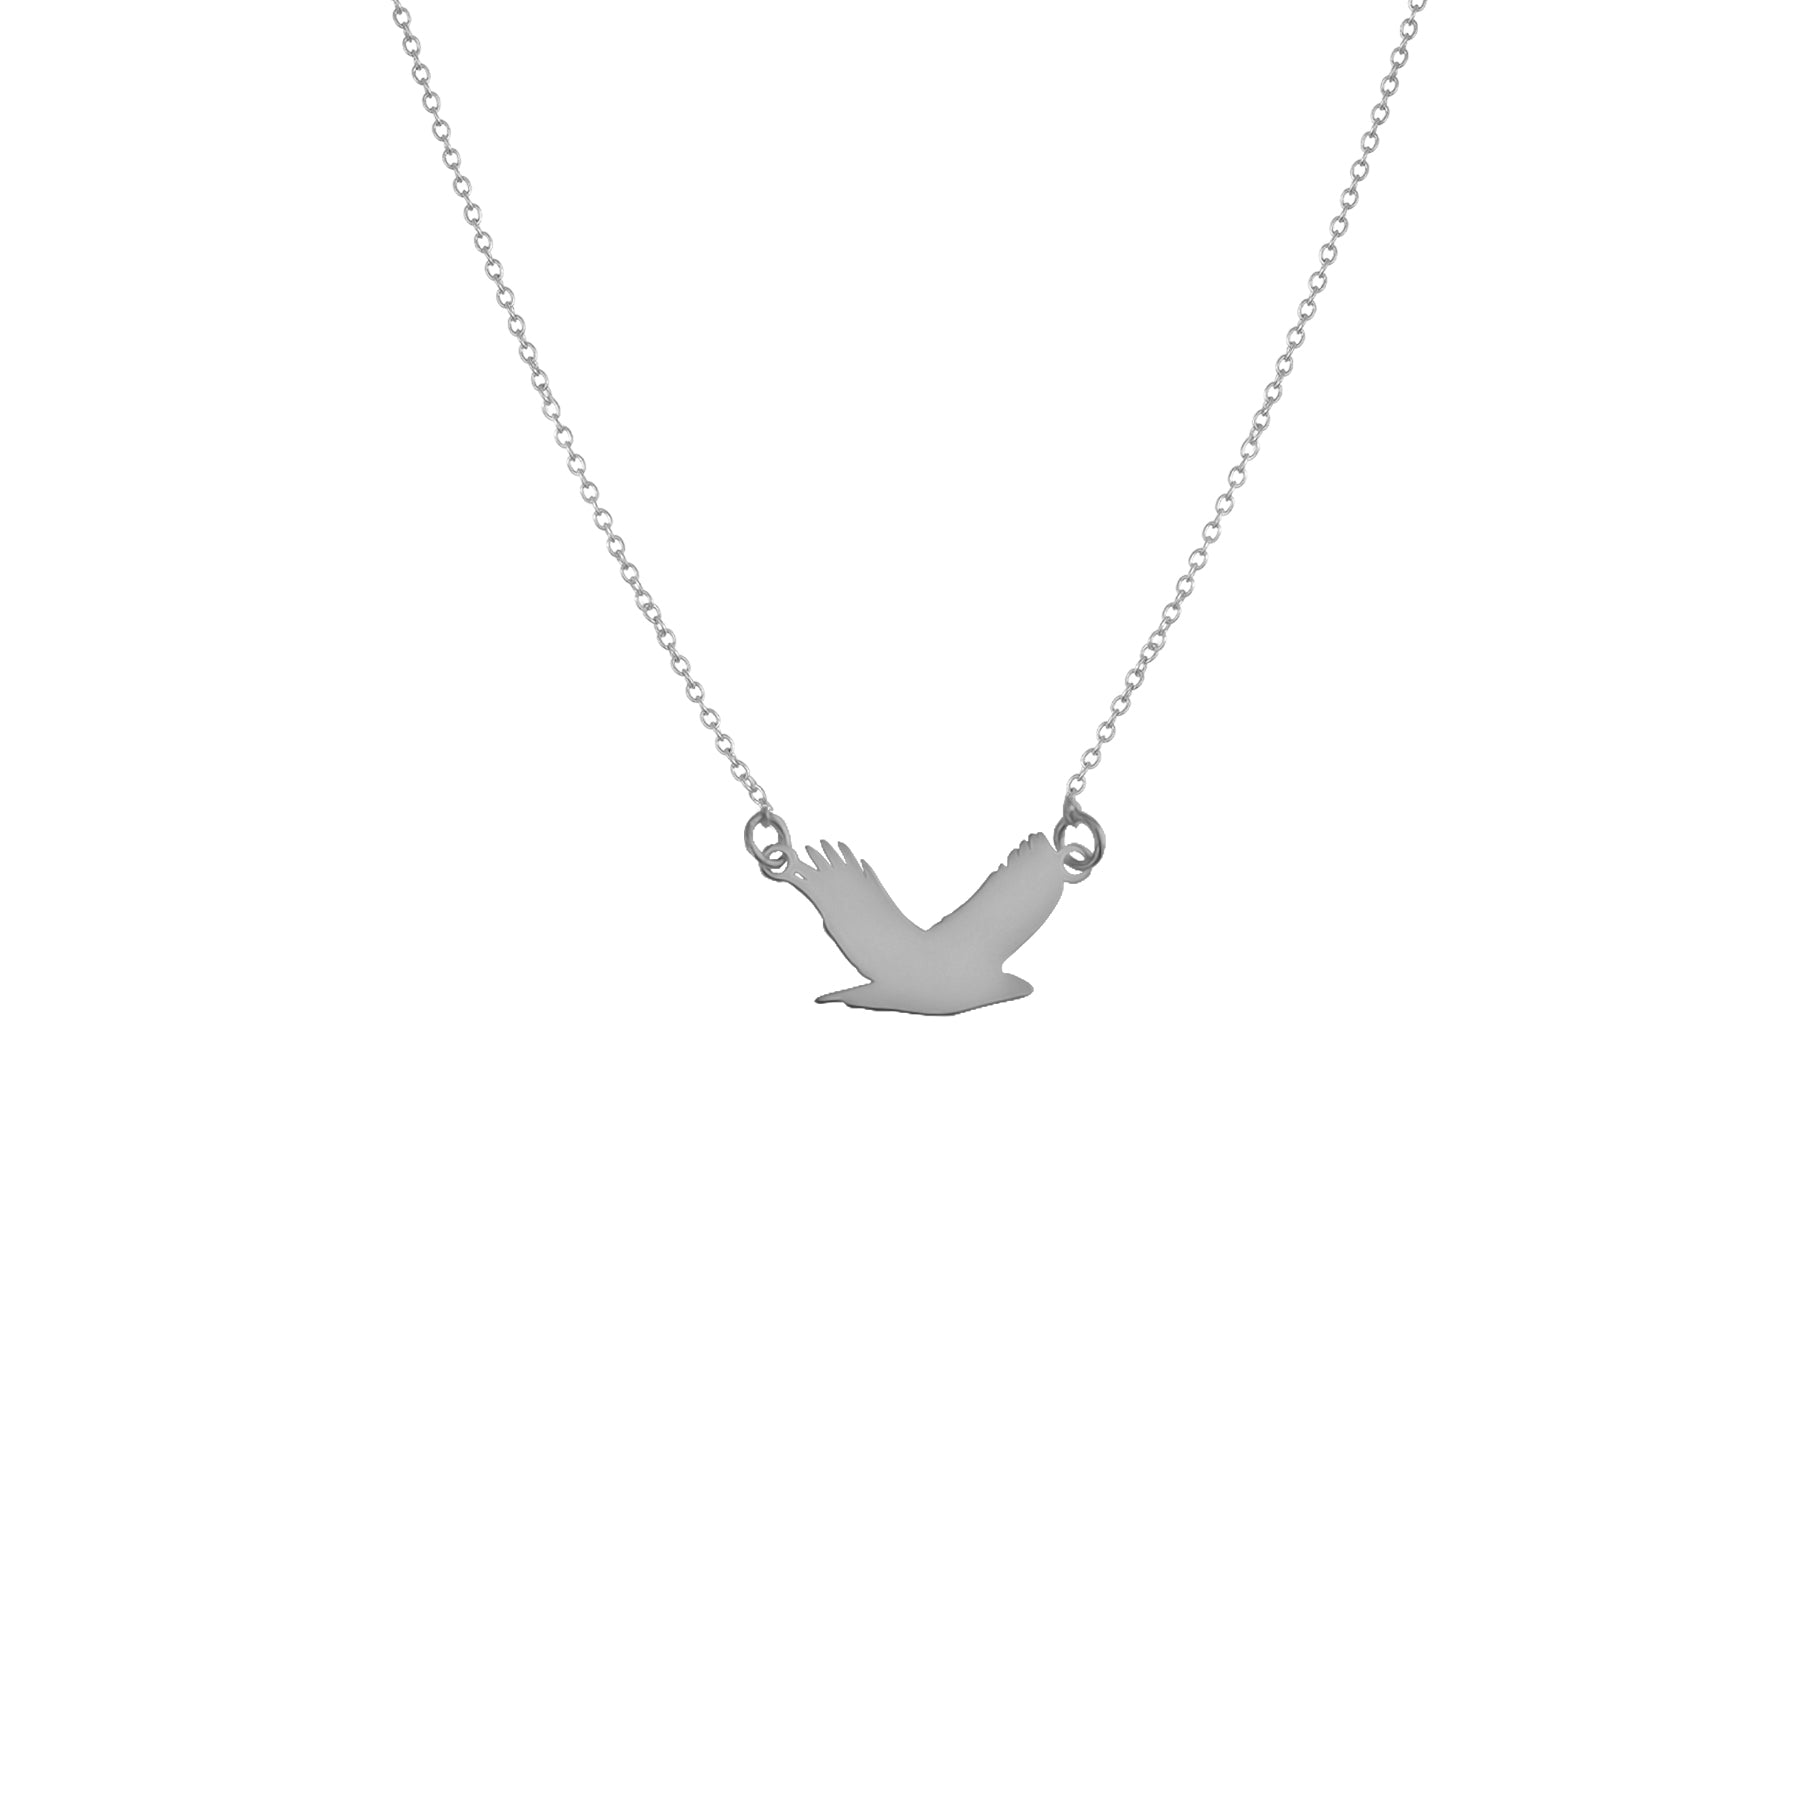 Silver eagle necklace